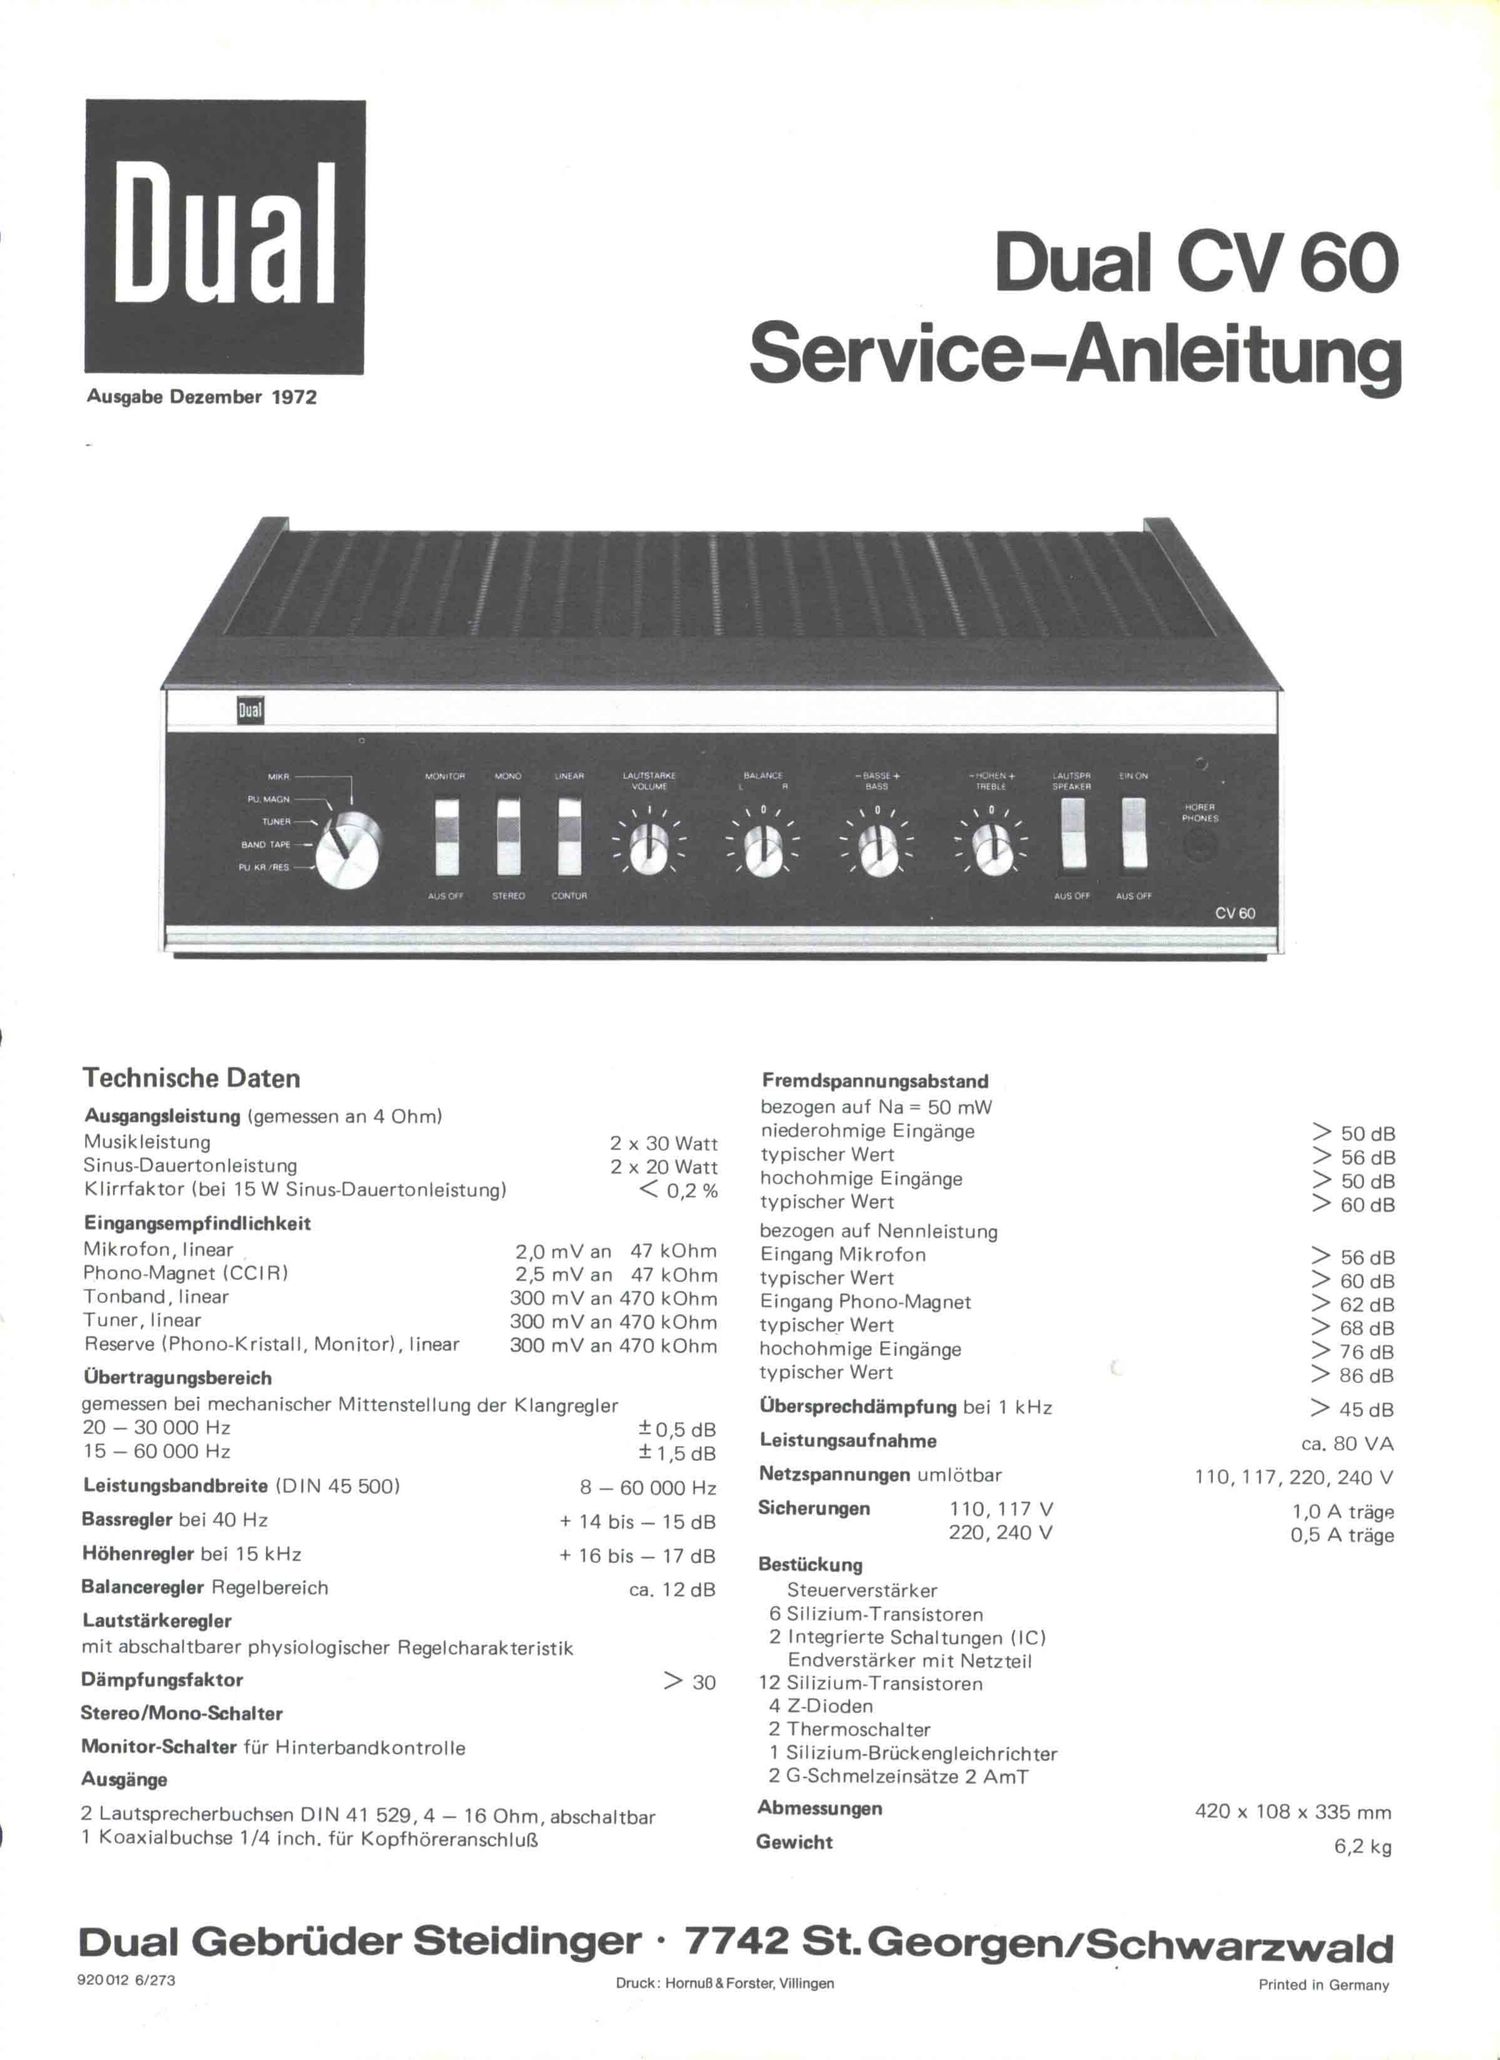 Dual CV 60 Service Manual